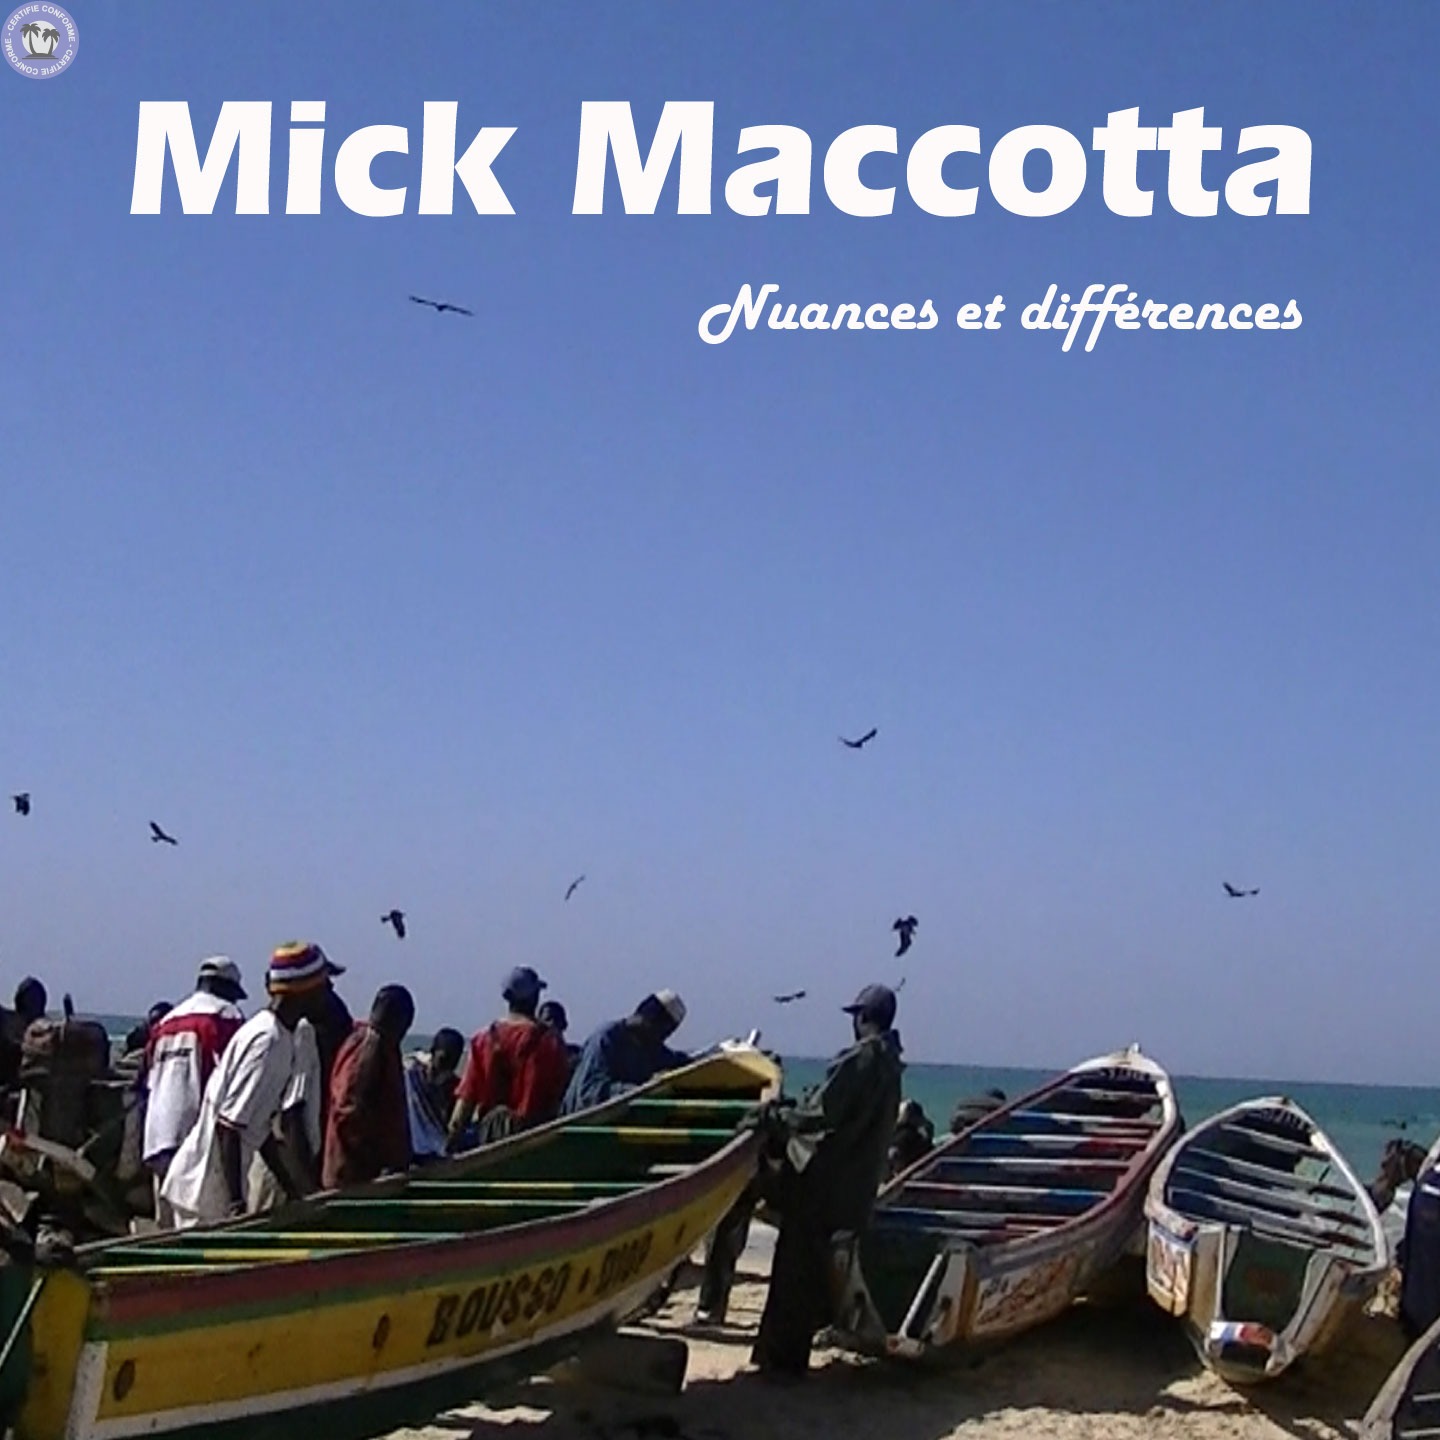 mick-maccotta-5202124394851555777.jpg